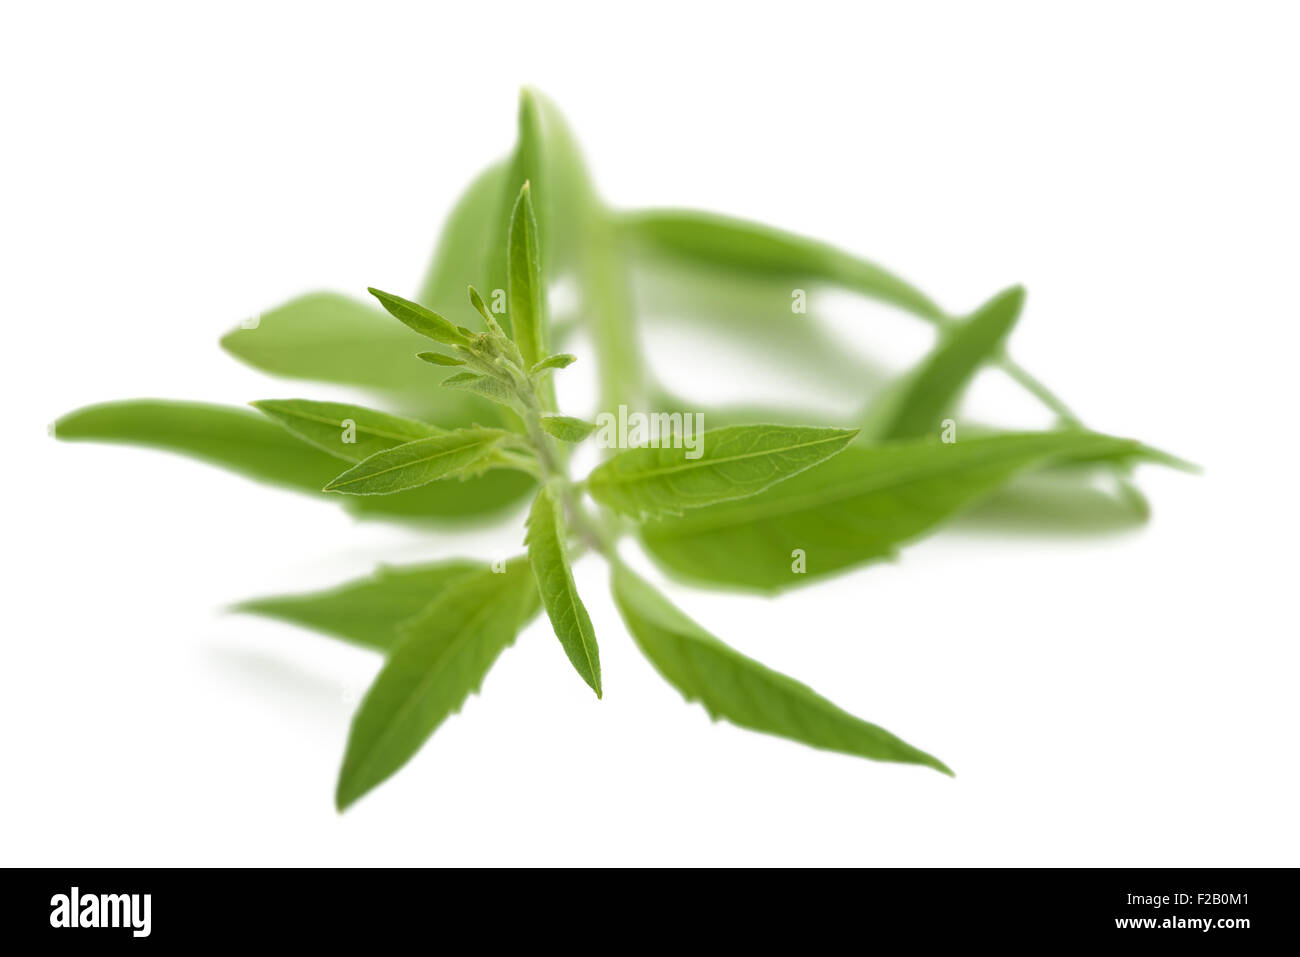 Lemon grass (verbena) isolated on white background Stock Photo